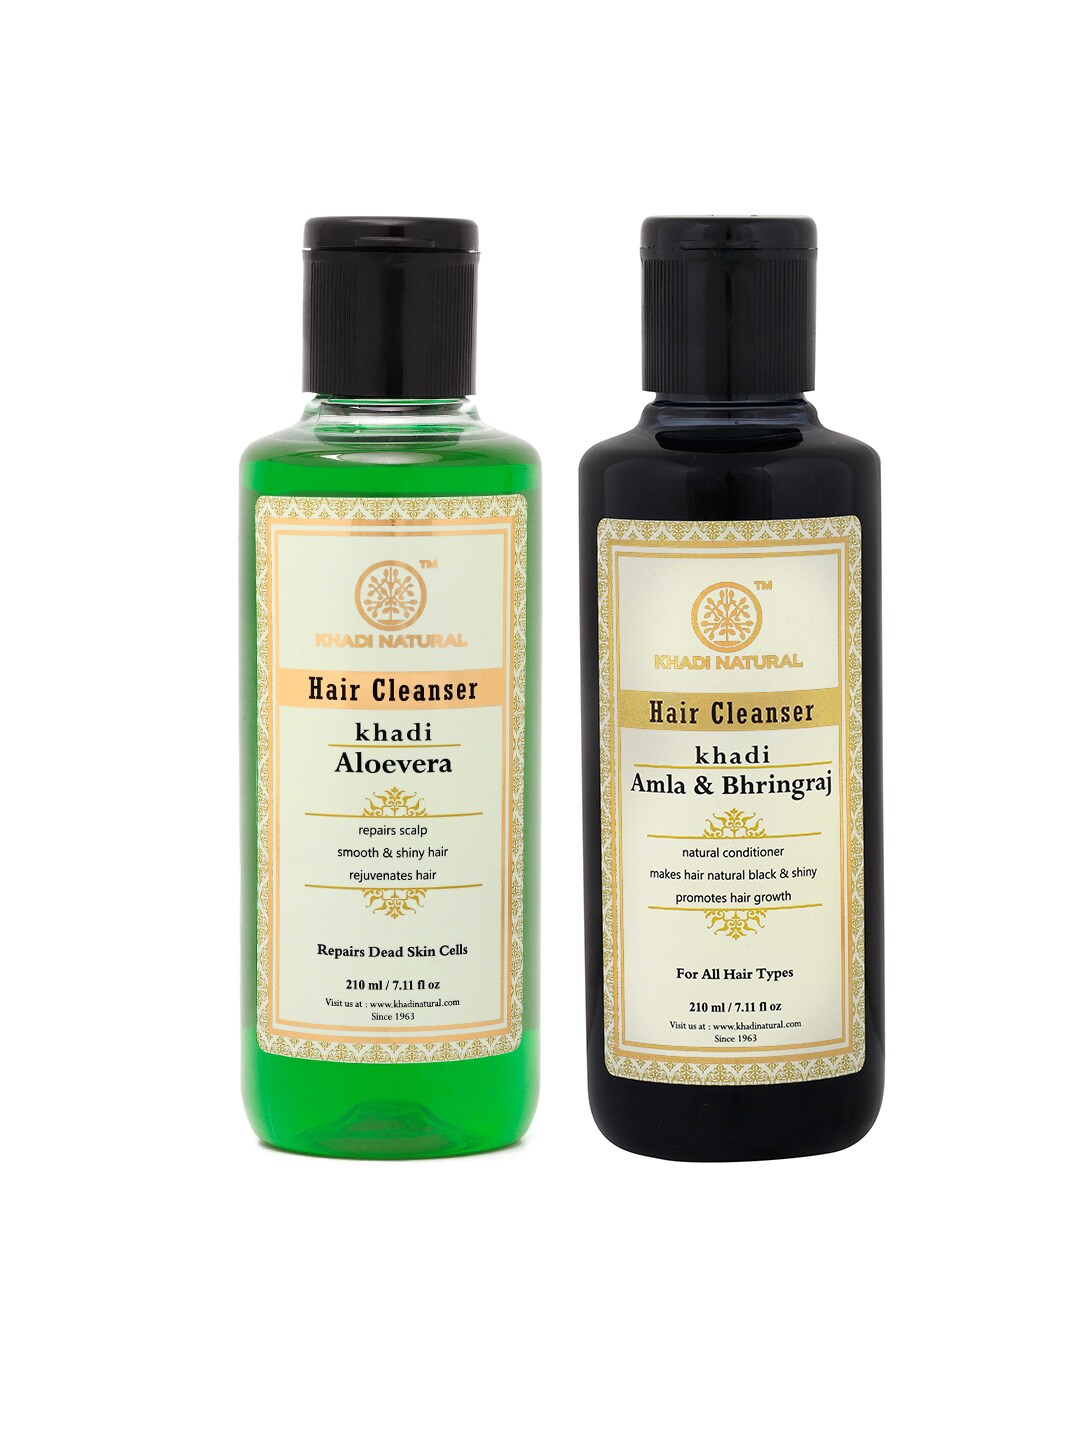 Khadi Natural Unisex Set of Aloevera Hair Cleanser & Amla Bhringraj Hair Cleanser Price in India